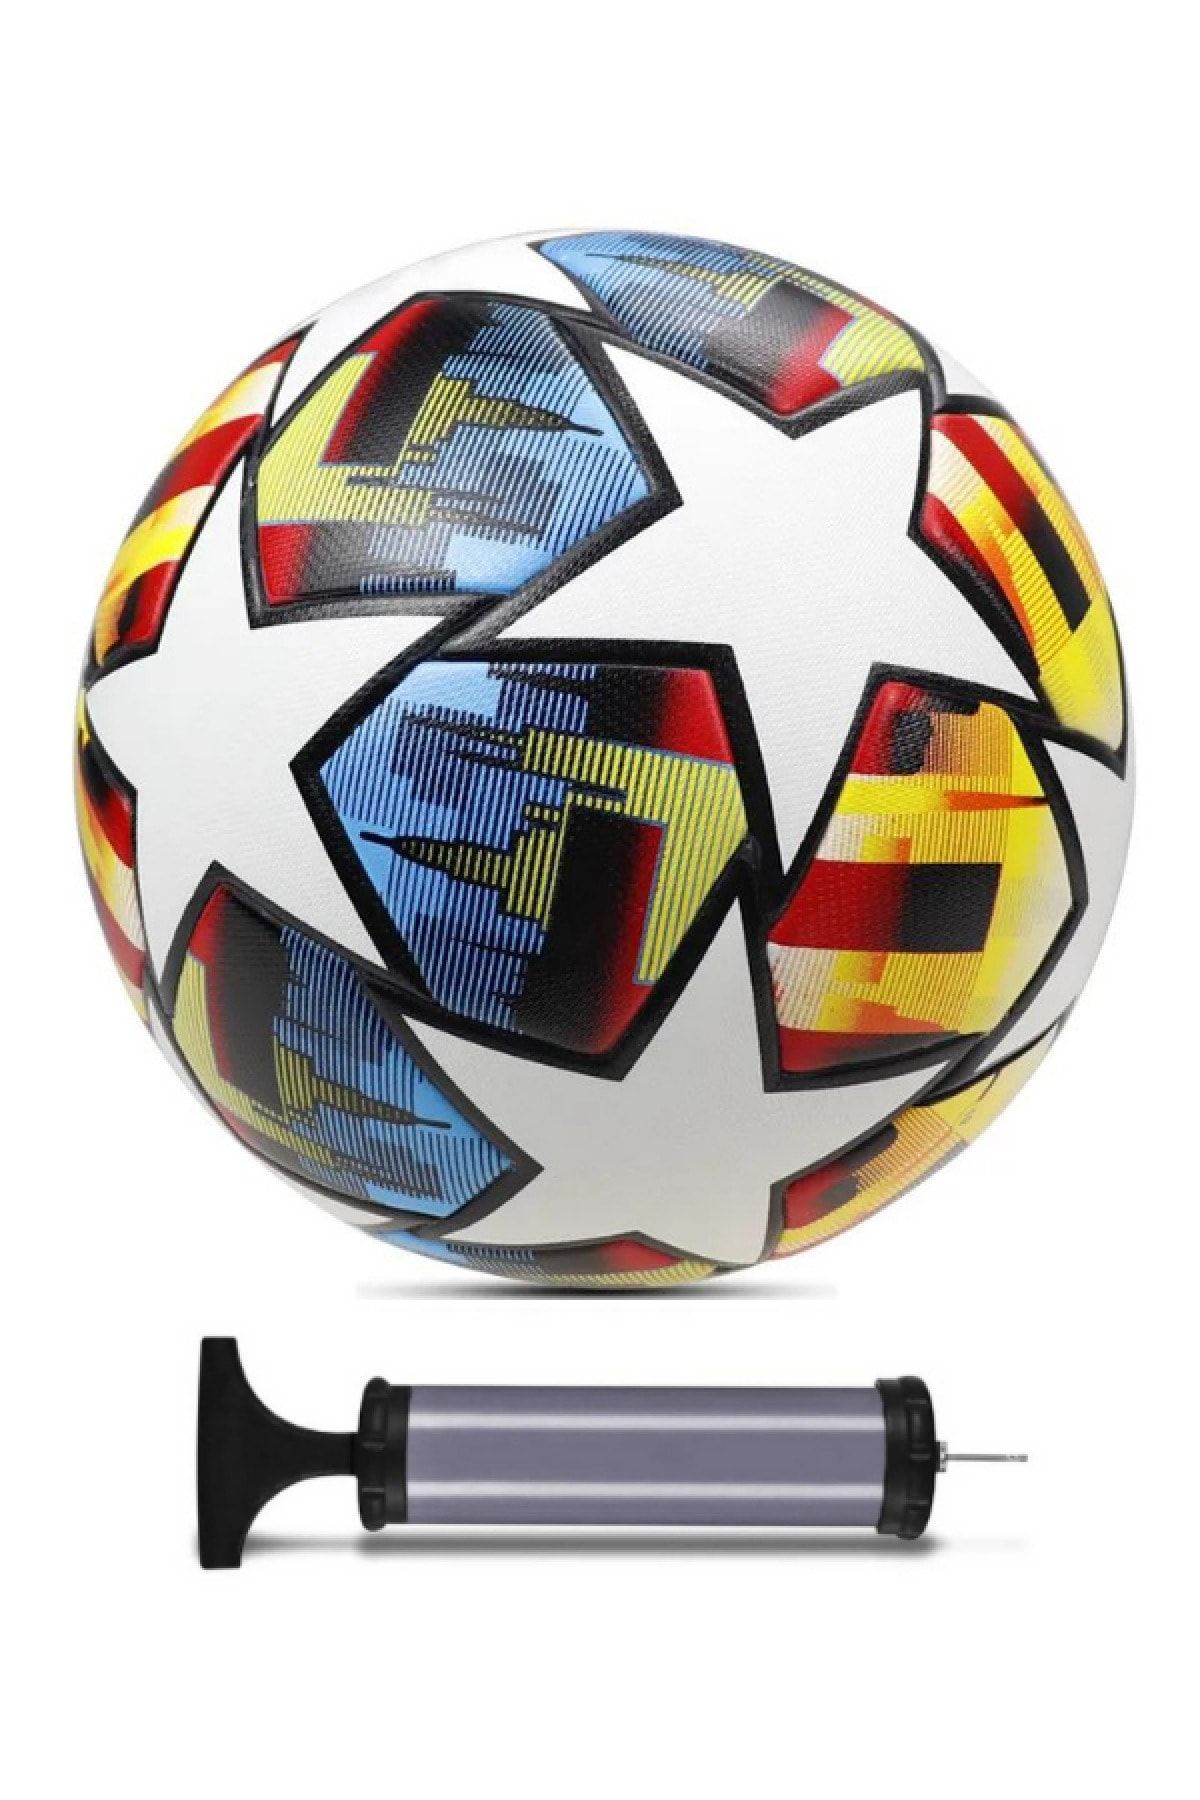 Janissary Renkli Şampiyonlar Ligi Tasarımı Profesyonel Dikişli Futbol Topu, 5 Numara, Halı Saha Topu Pompa